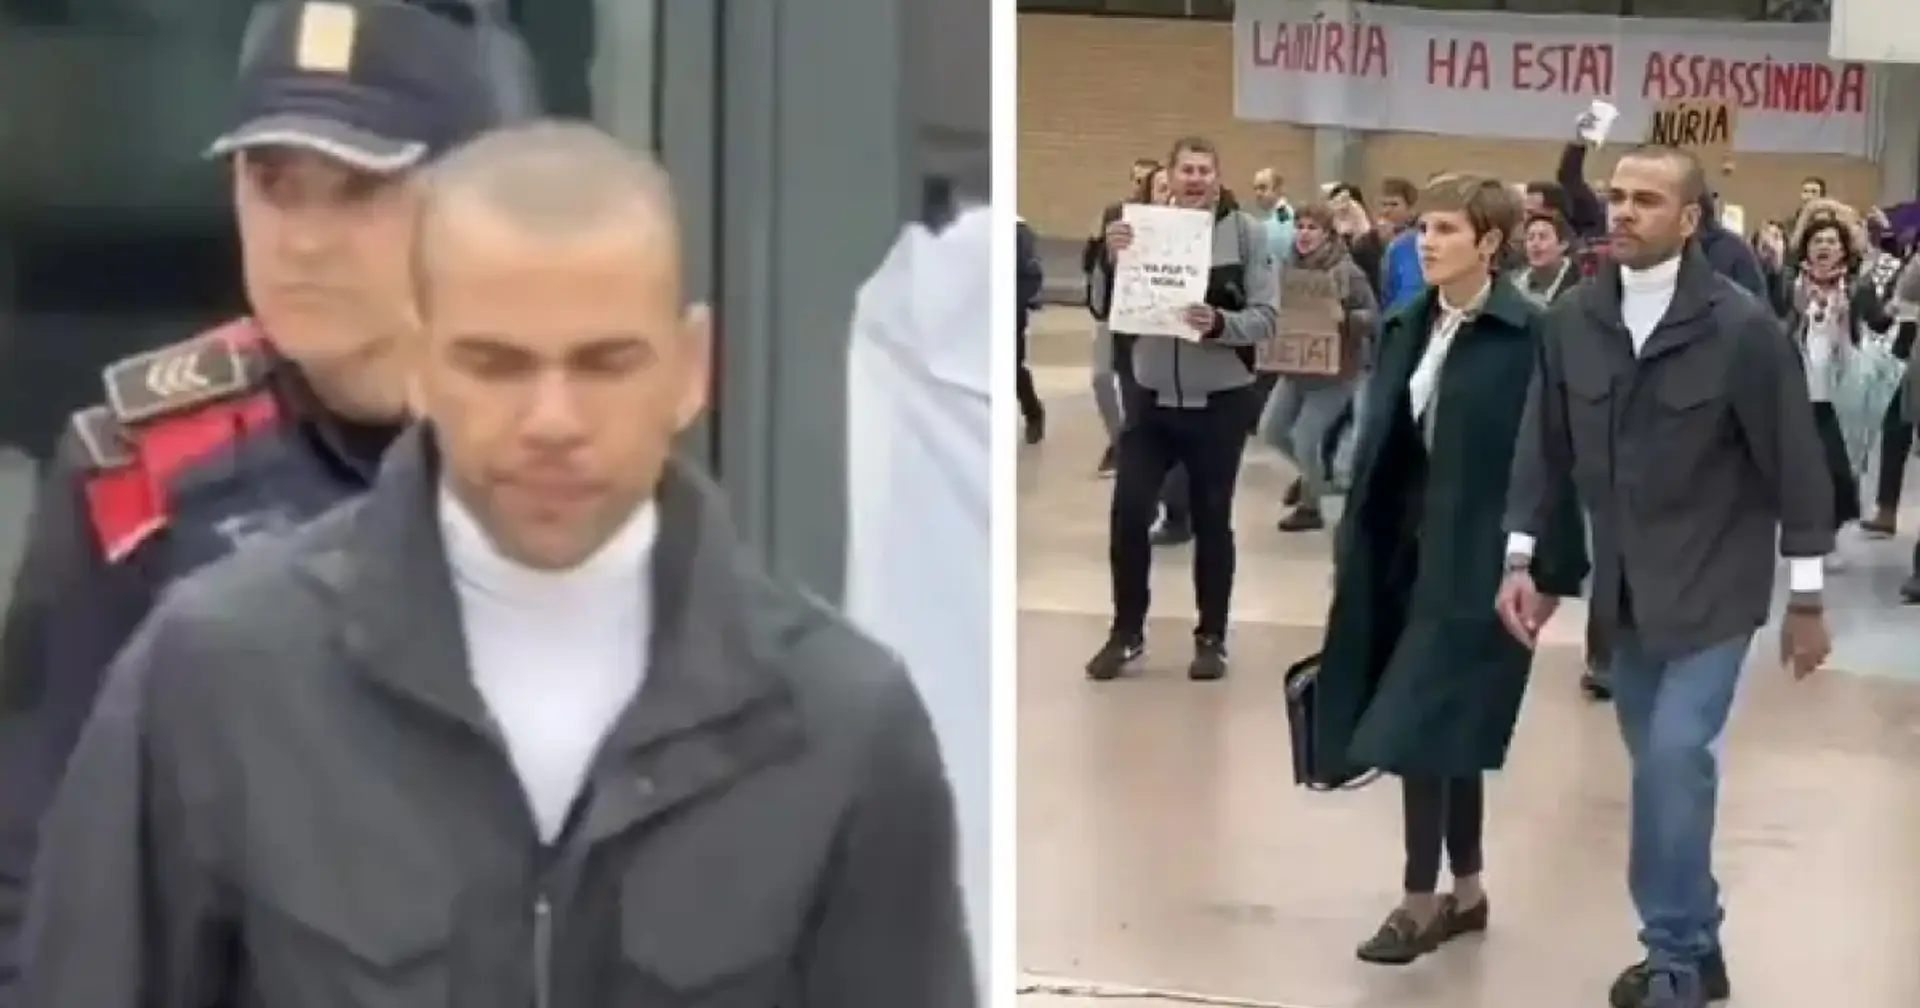 Erstes Video nach Dani Alves' offizieller Entlassung aus dem Gefängnis